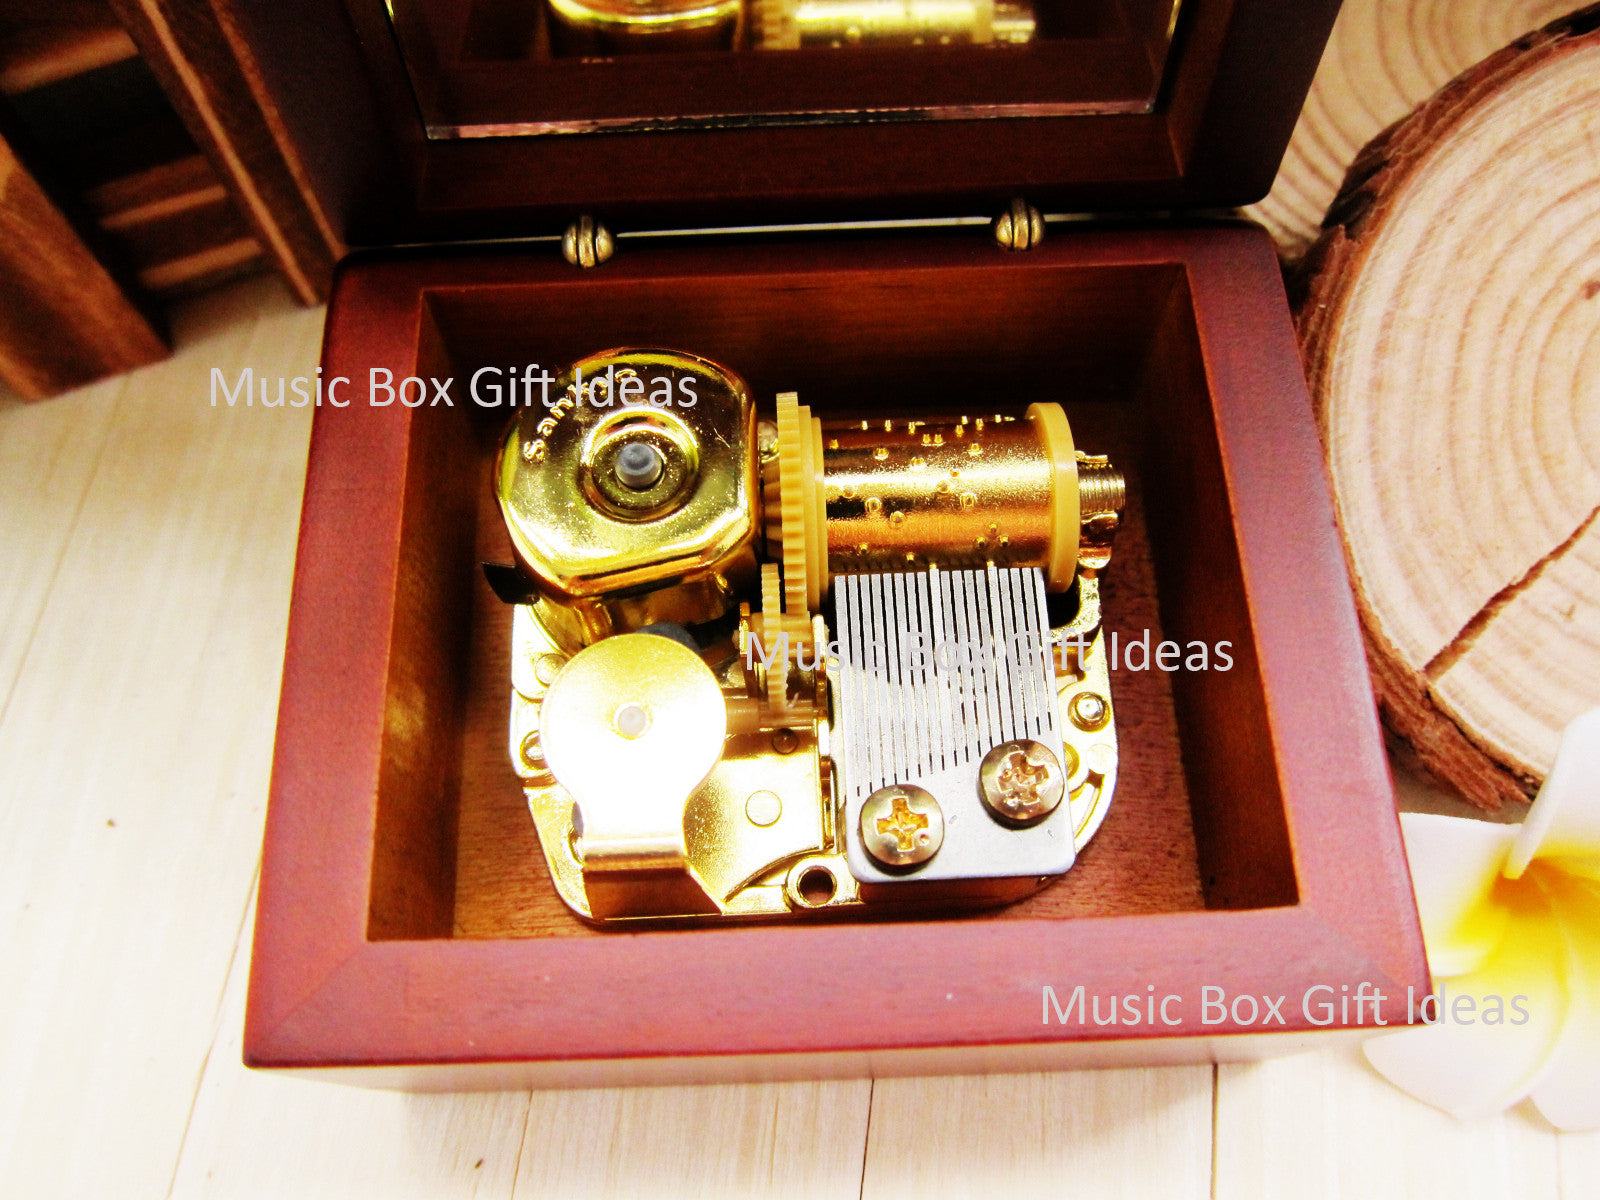 Musical The Phantom of the Opera Theme Soundtrack 18-Note Music Box Gift (Wooden Clockwork) - Music Box Gift Ideas